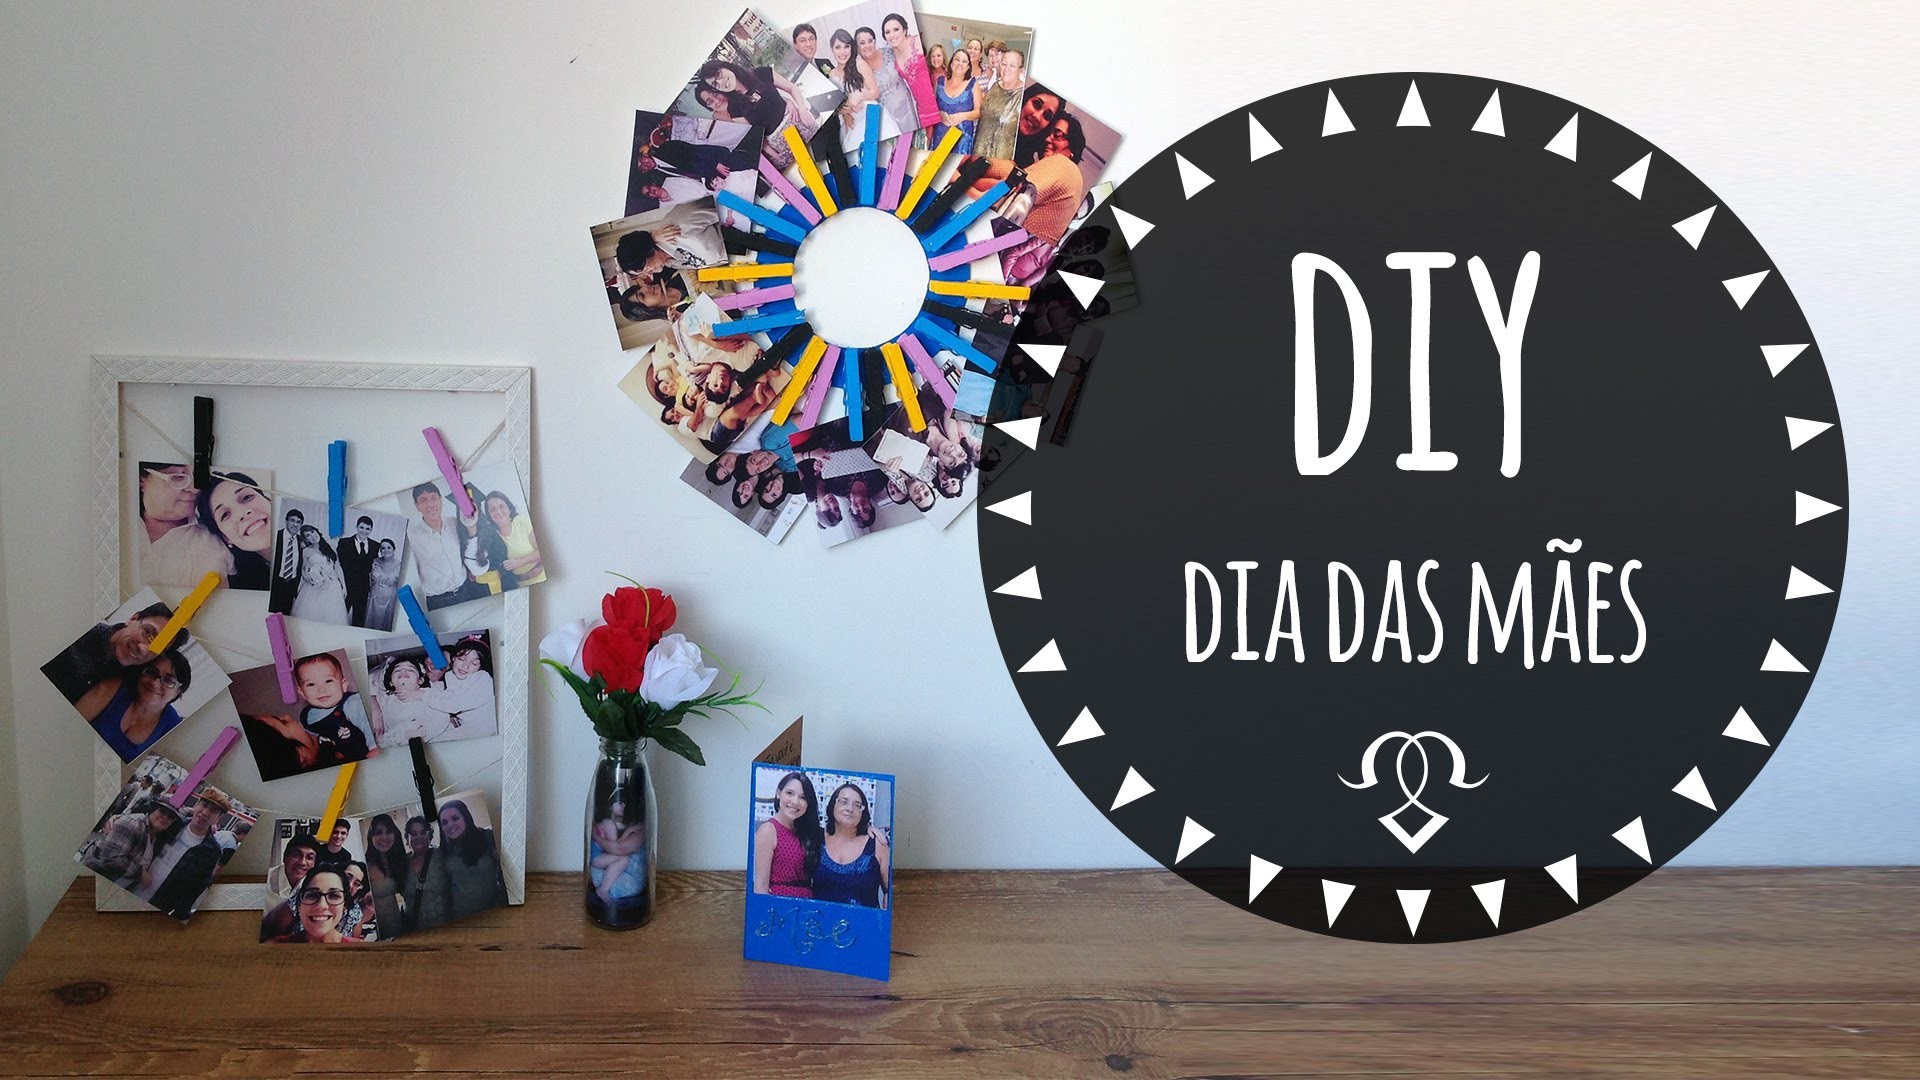 DIY- Dia das MÃES - Mother's day gift